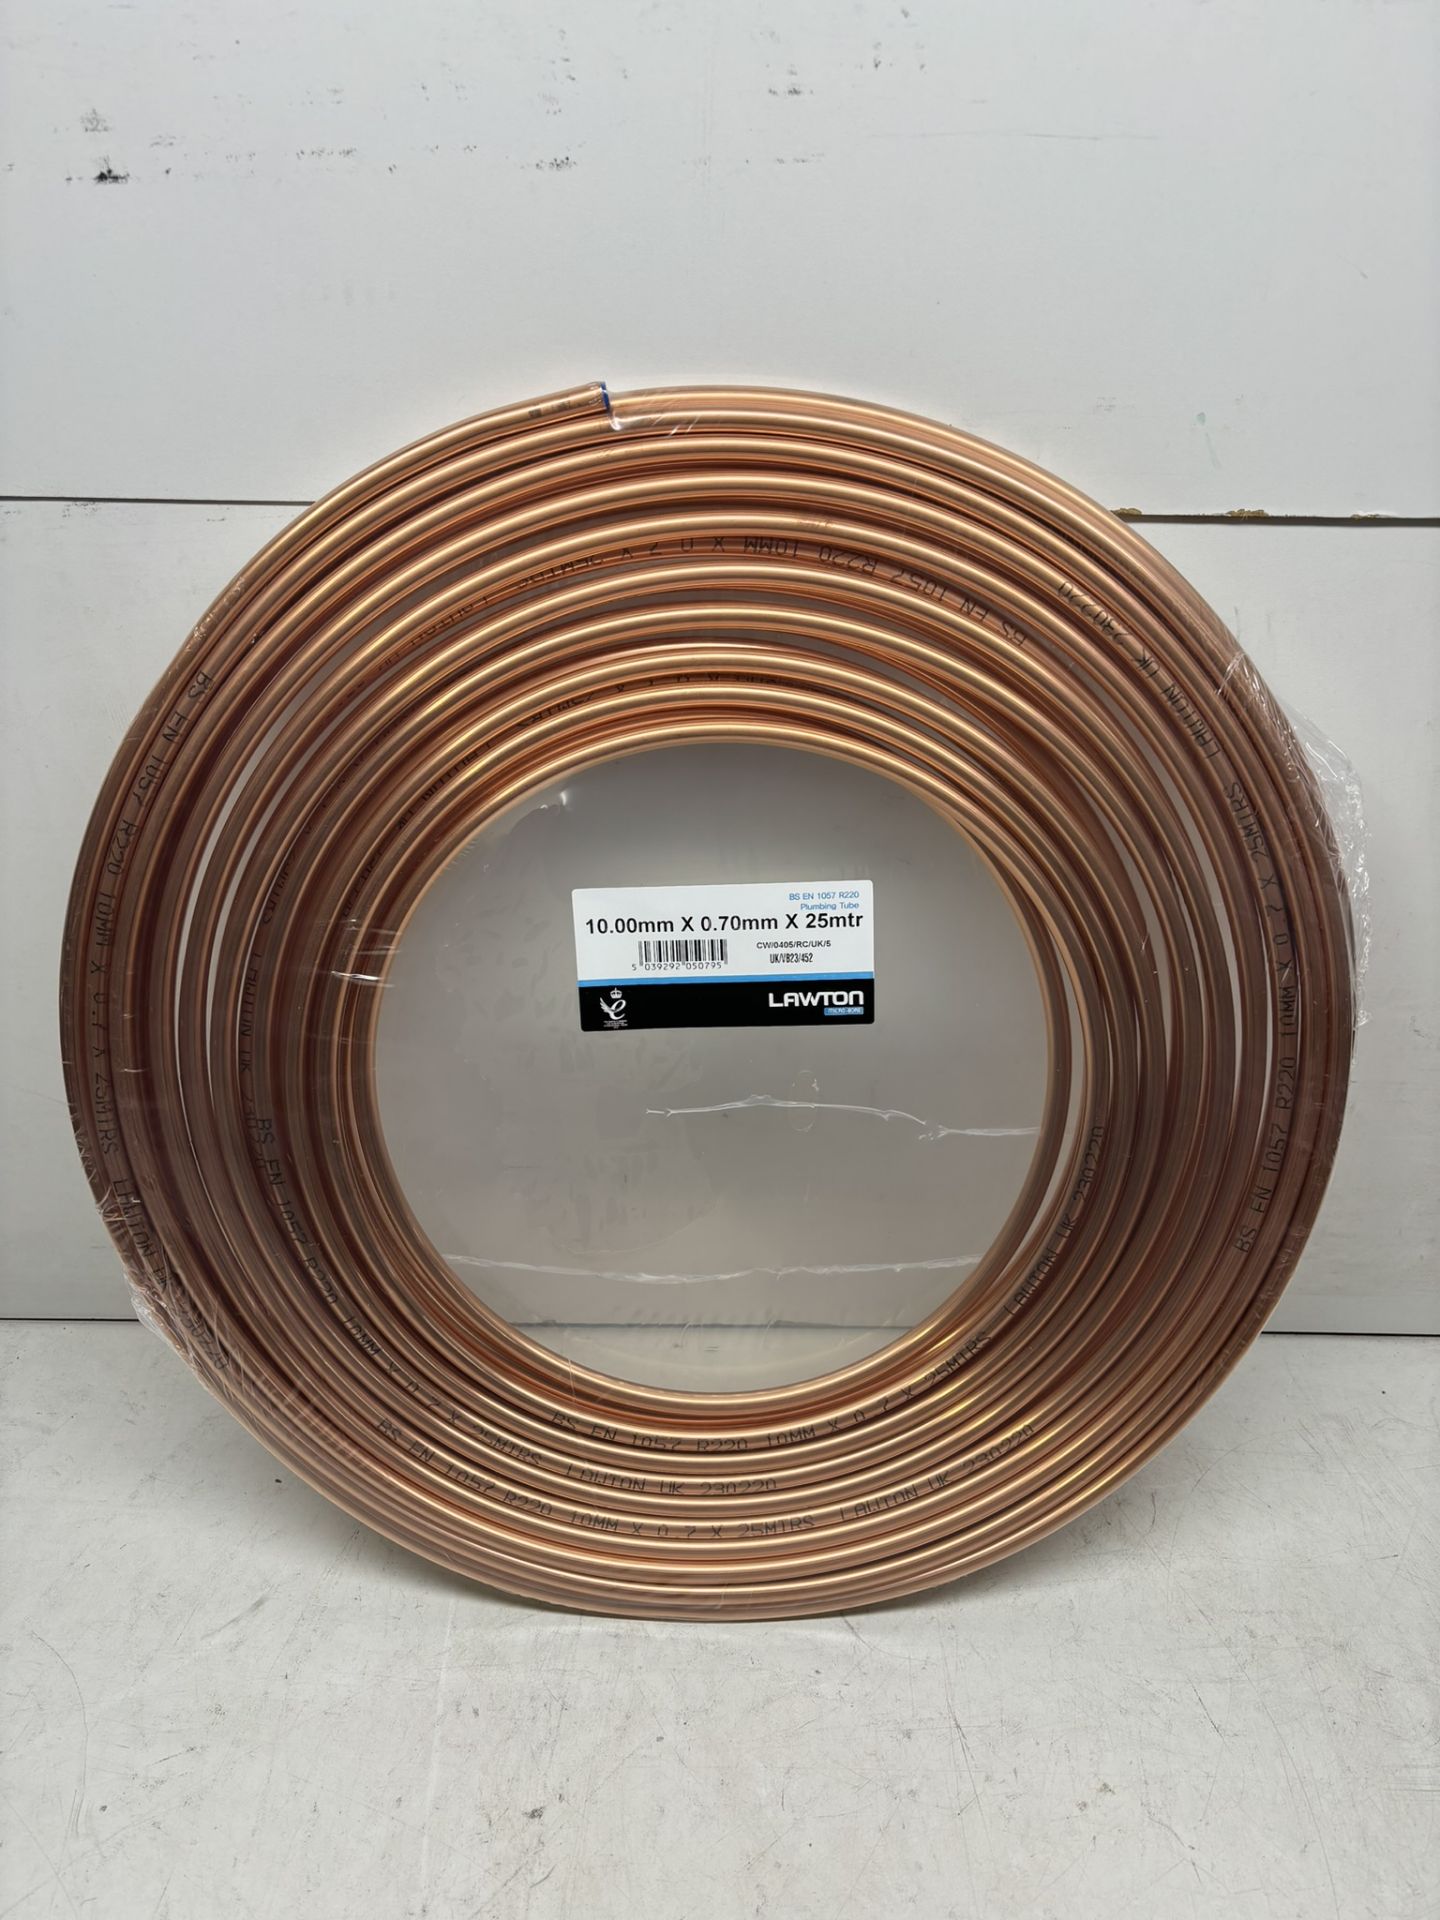 3 x Lawton 10.00mm x 0.70mm x 25Mtr Copper Plumbing Tube Coils - Image 2 of 9